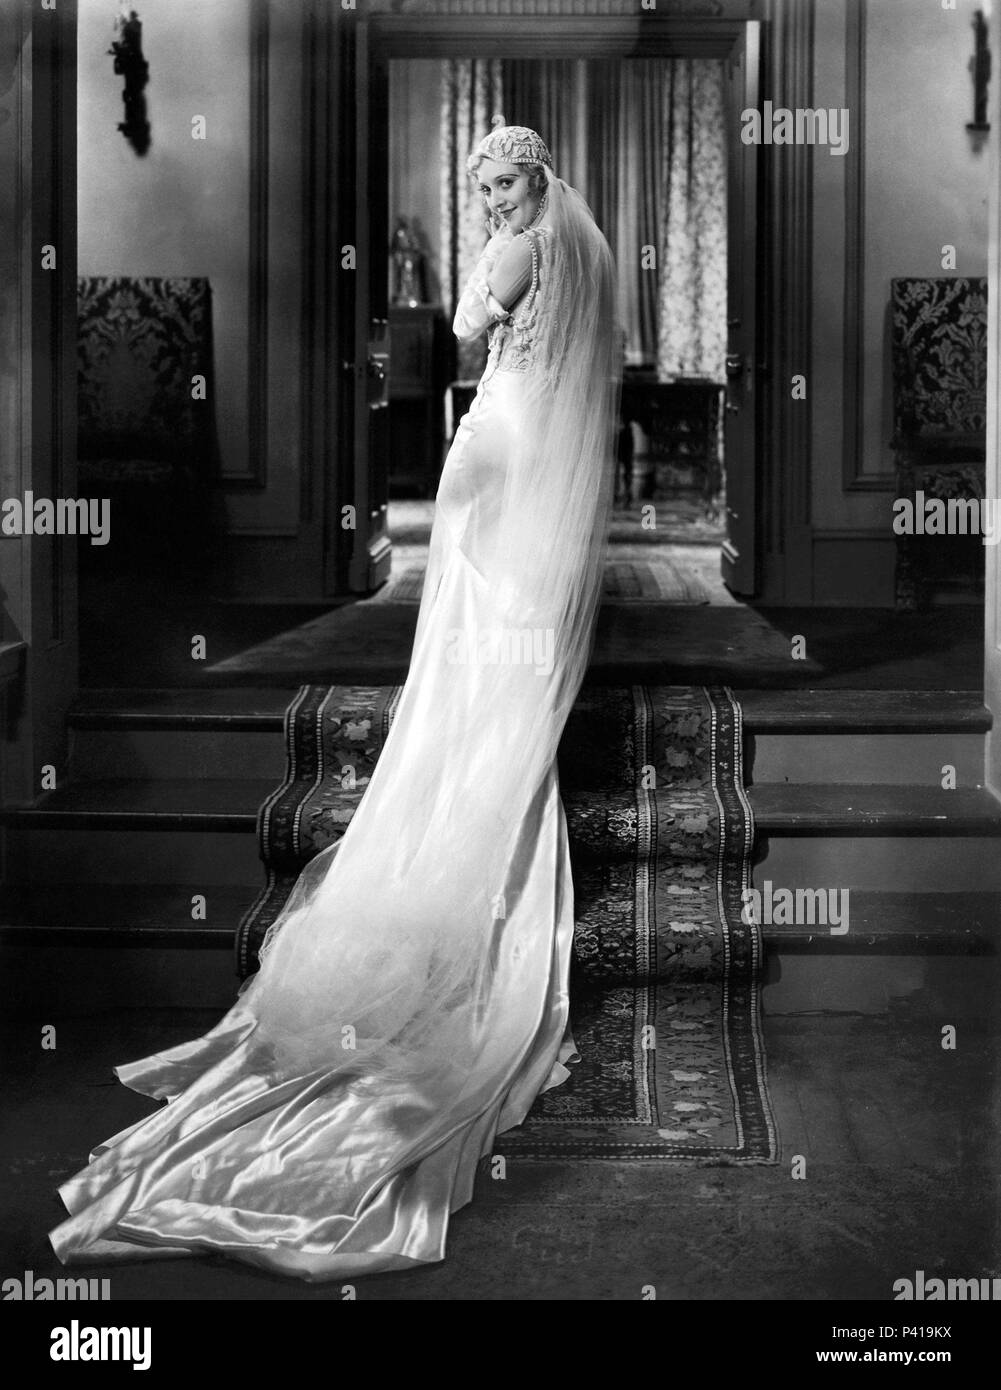 Original Film Title: WHITE ZOMBIE.  English Title: WHITE ZOMBIE.  Film Director: VICTOR HUGO HALPERIN.  Year: 1932.  Stars: MADGE BELLAMY. Credit: UNITED ARTISTS / Album Stock Photo